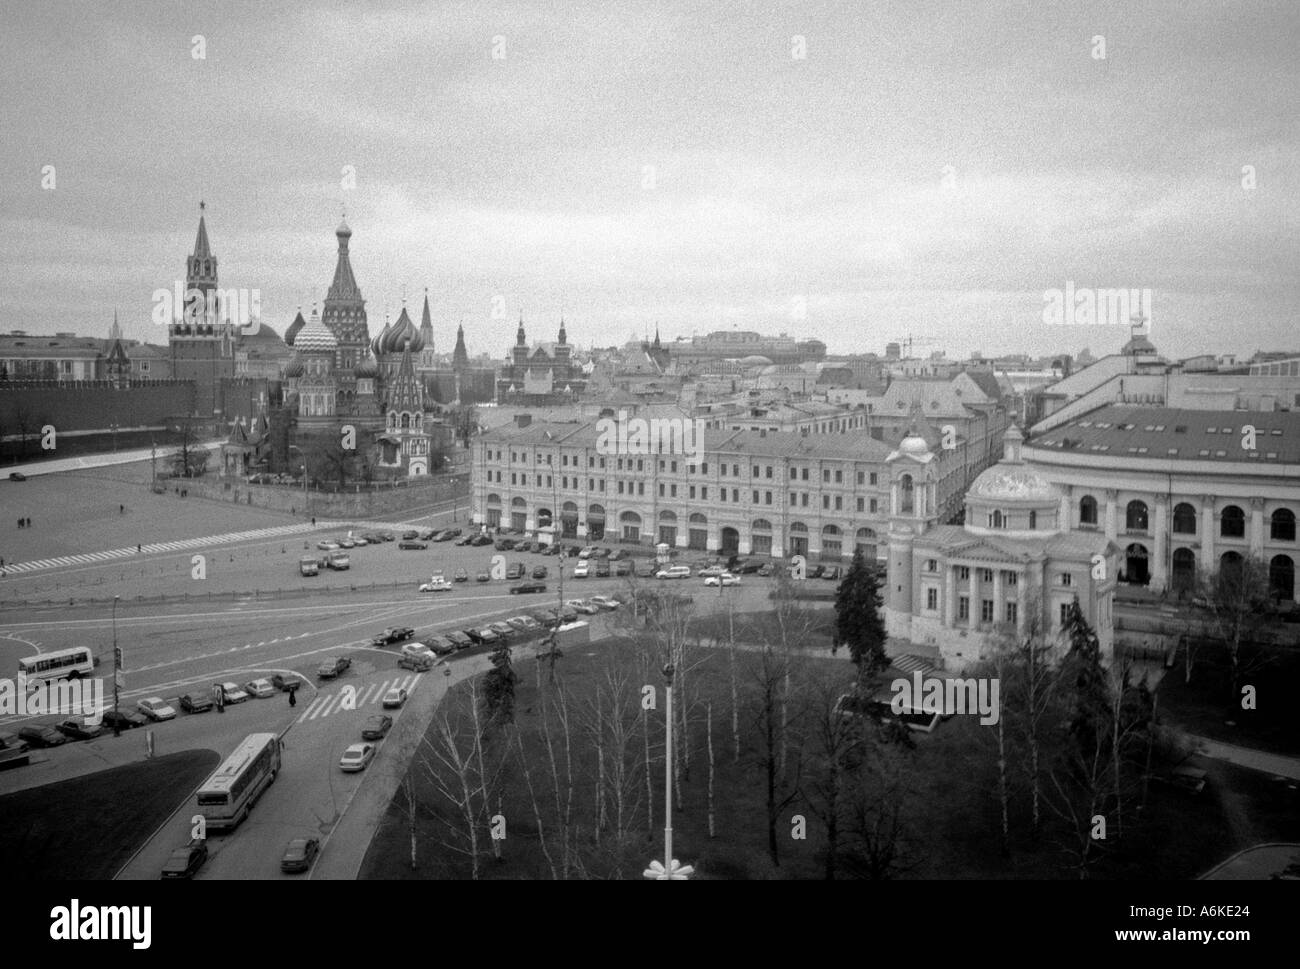 Spasskaja-Turm & Kathedrale Basilius des seligen Basilius Roter Platz Moskau Russland Russische Föderation Eurasiens Stockfoto